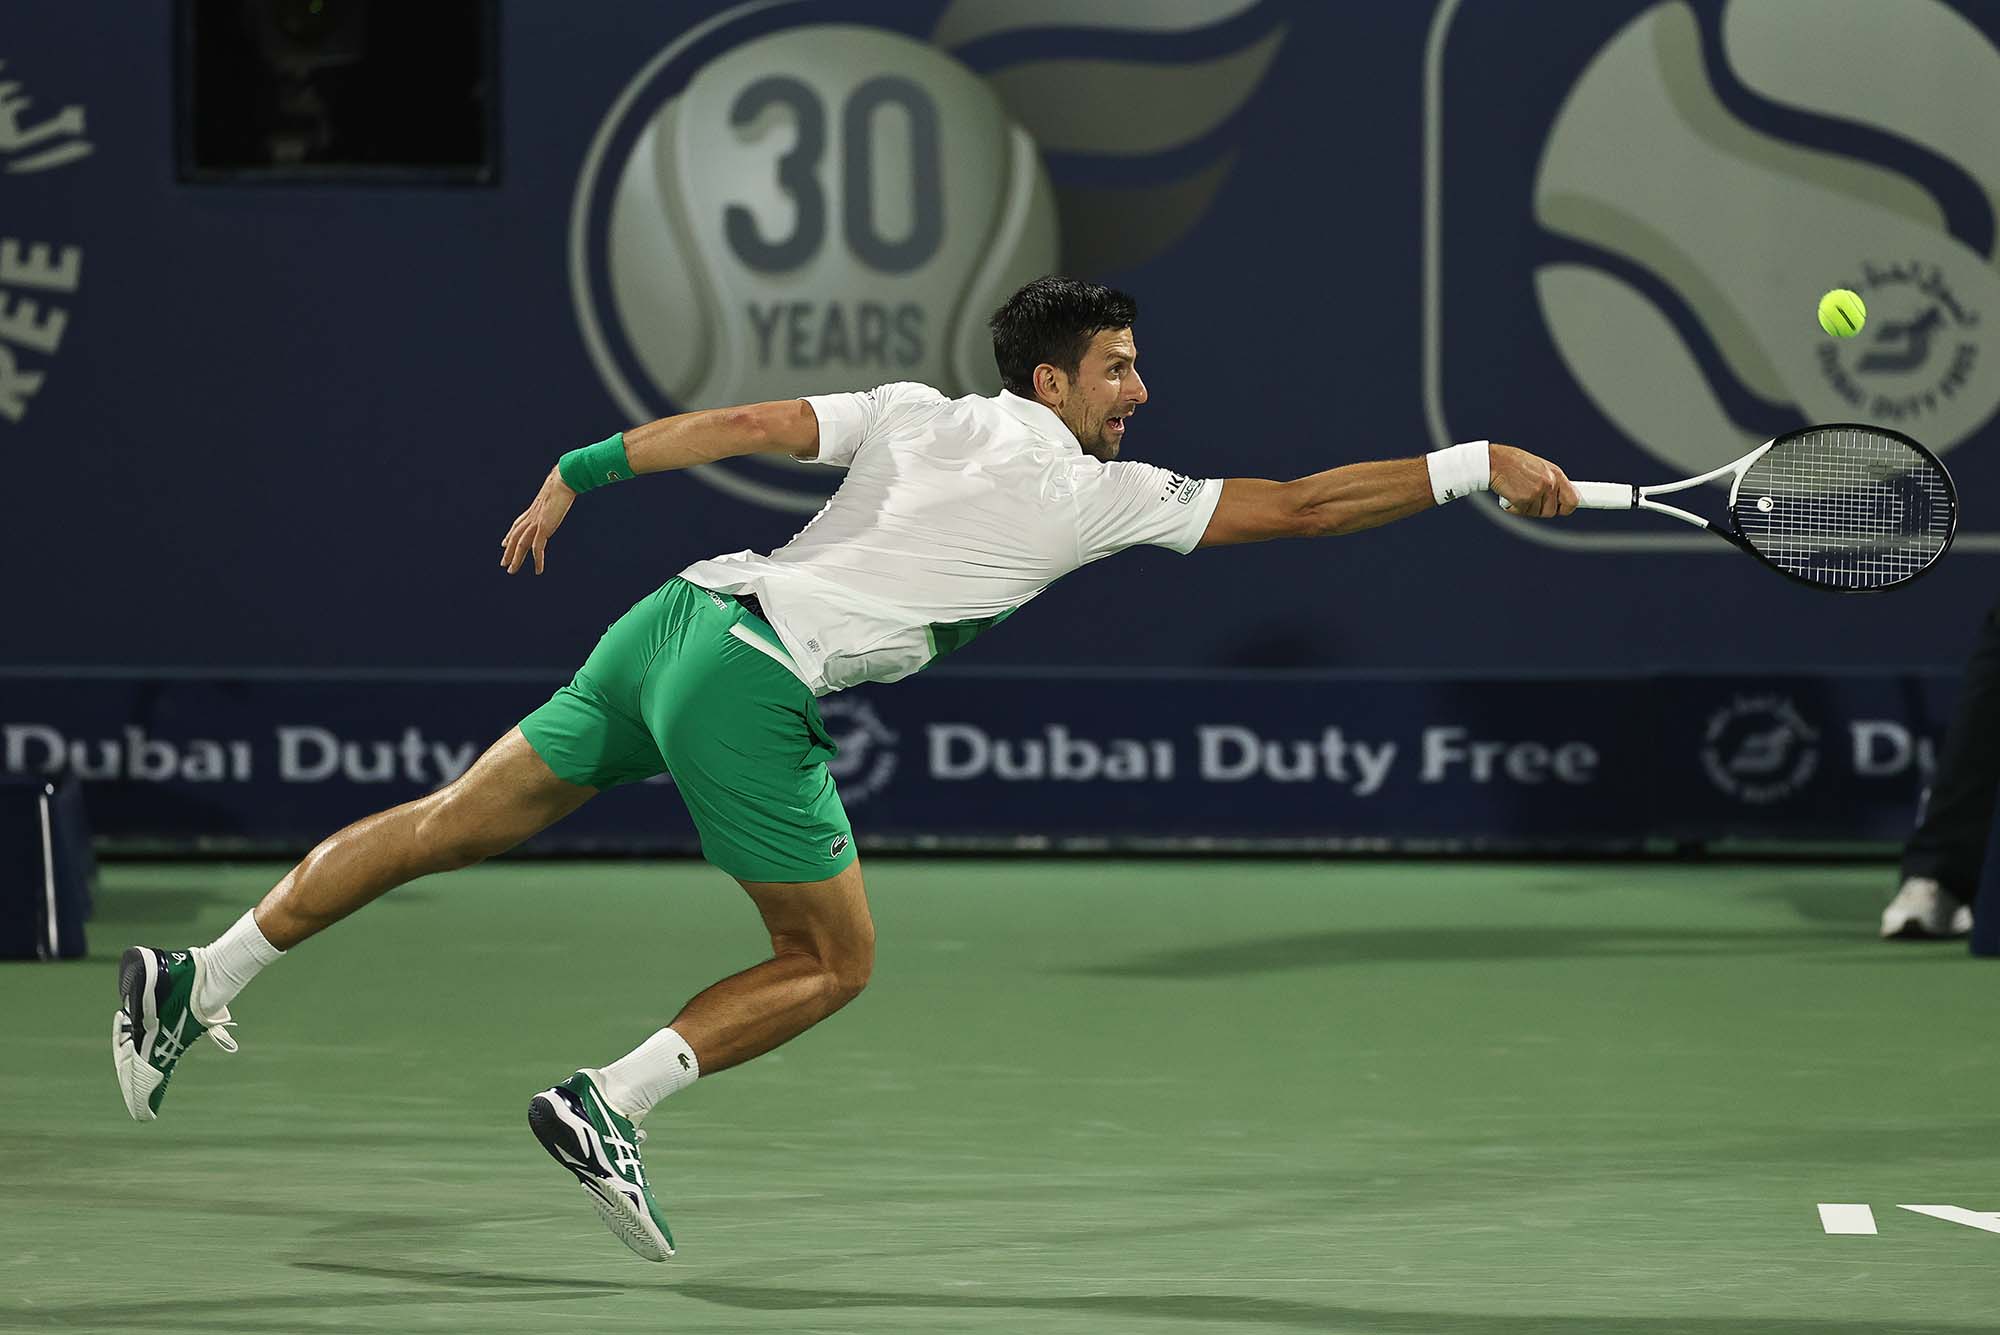 Djokovic Continues Perfect 2023 Beating Hurkacz in Dubai